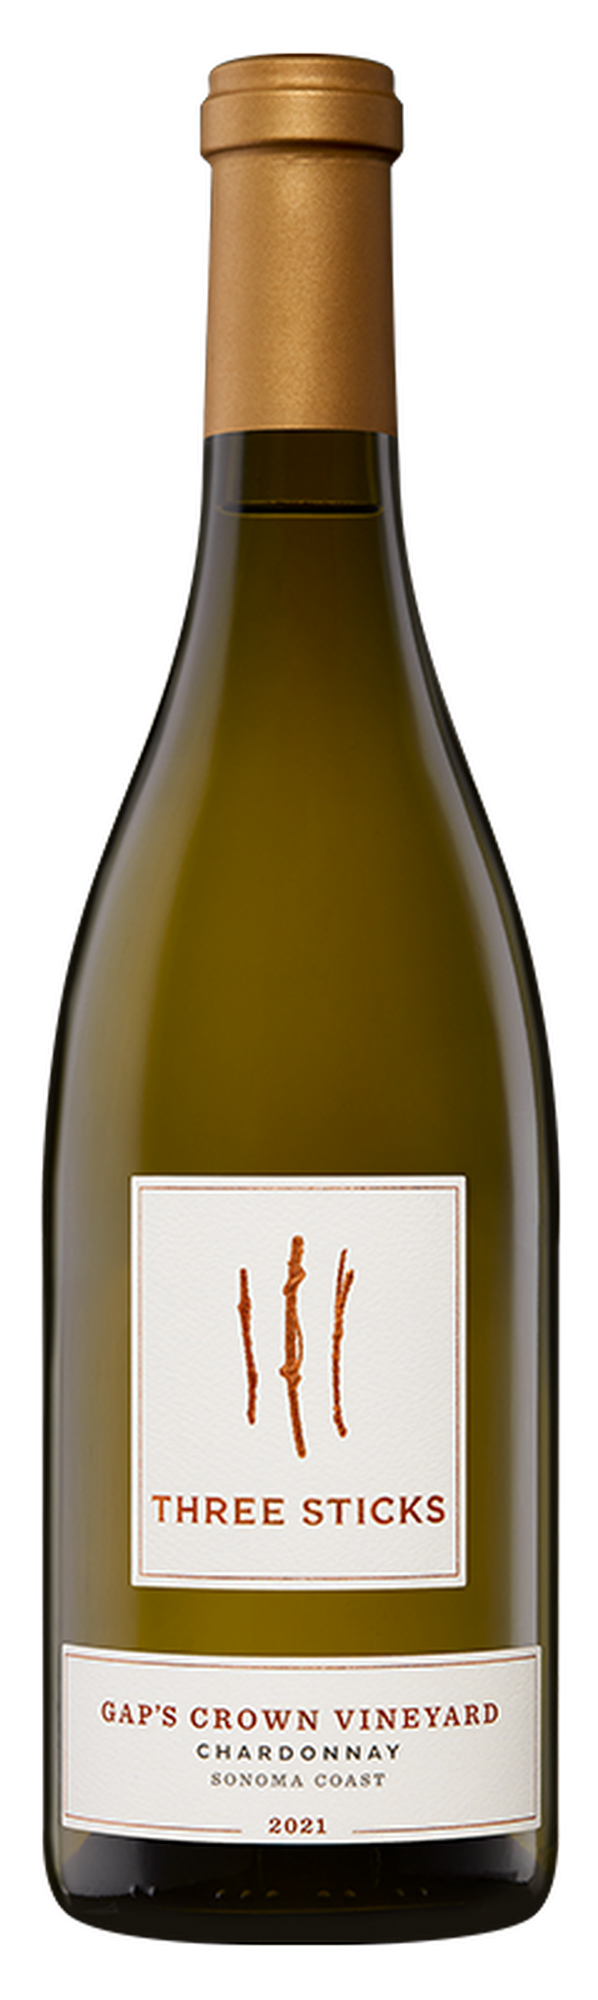 2021 Gap's Crown Vineyard Chardonnay 1.5L